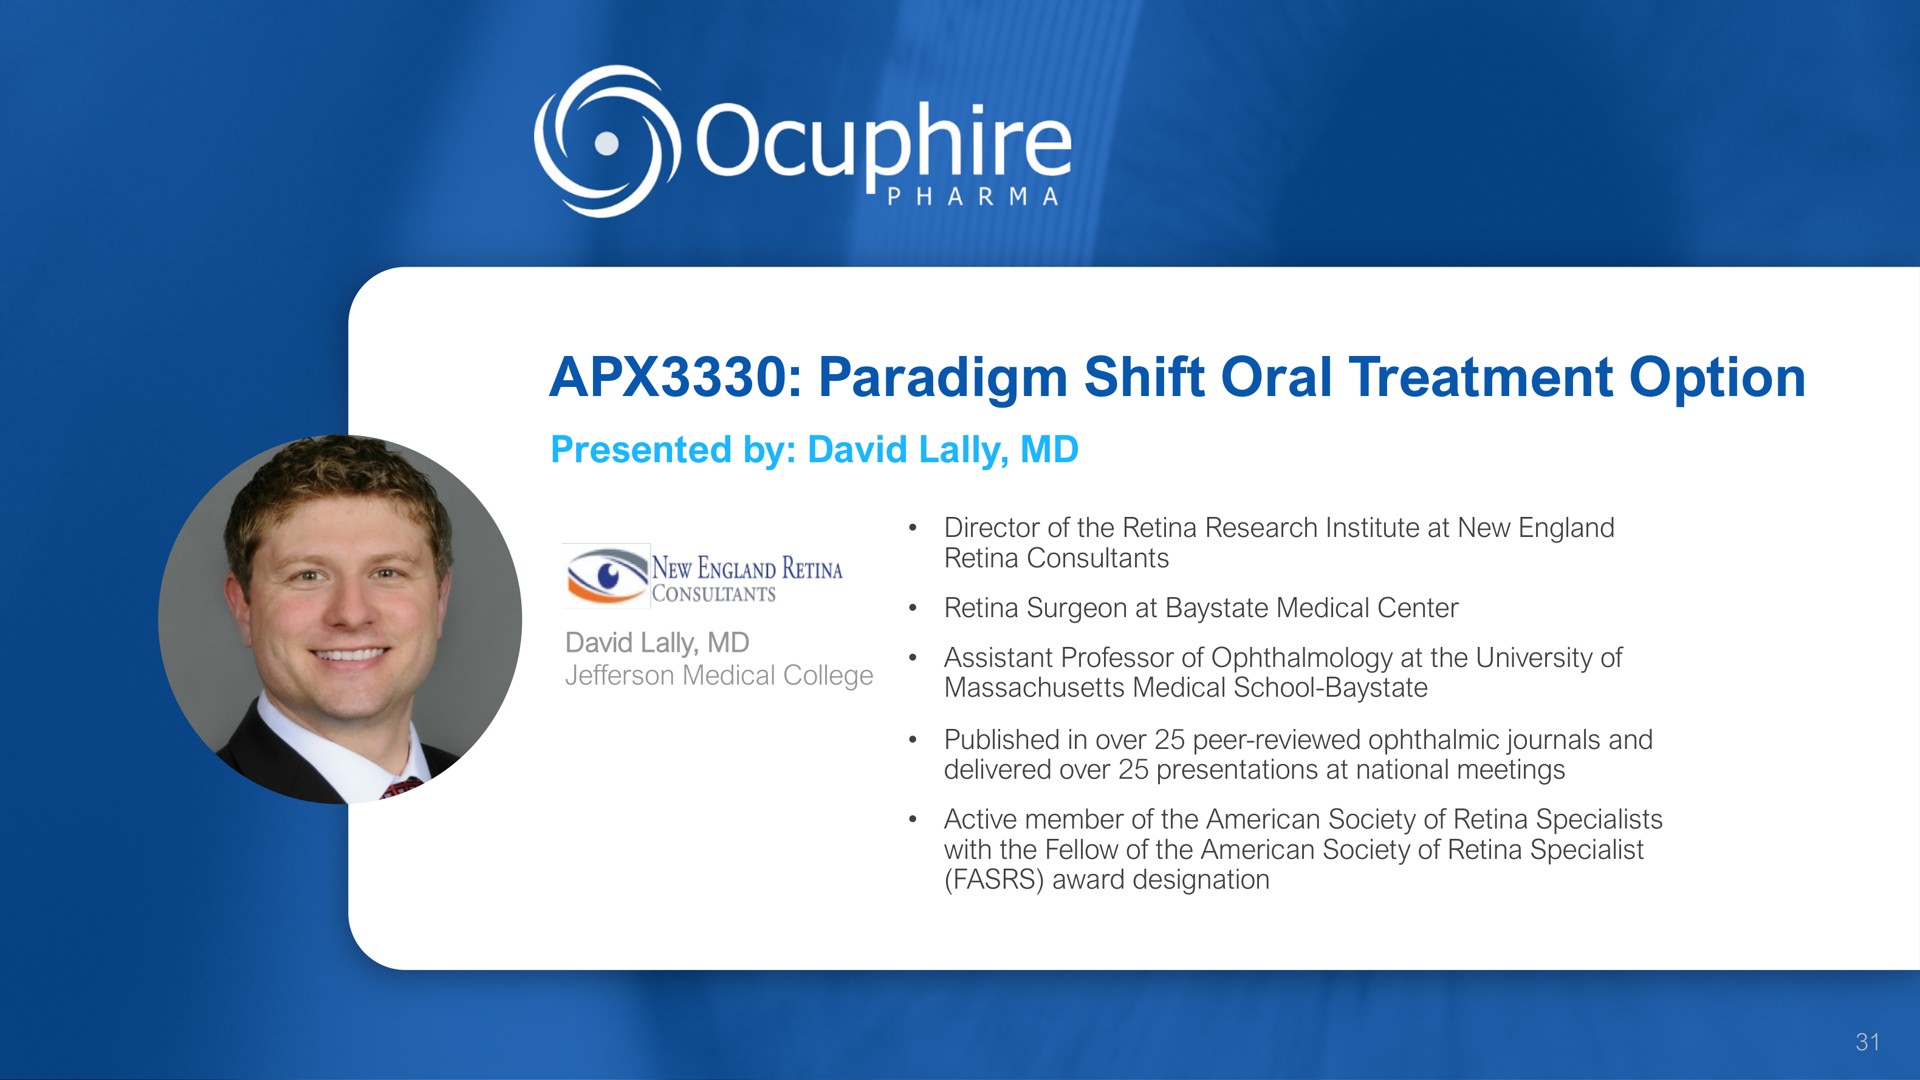 paradigm shift oral treatment option | Ocuphire Pharma